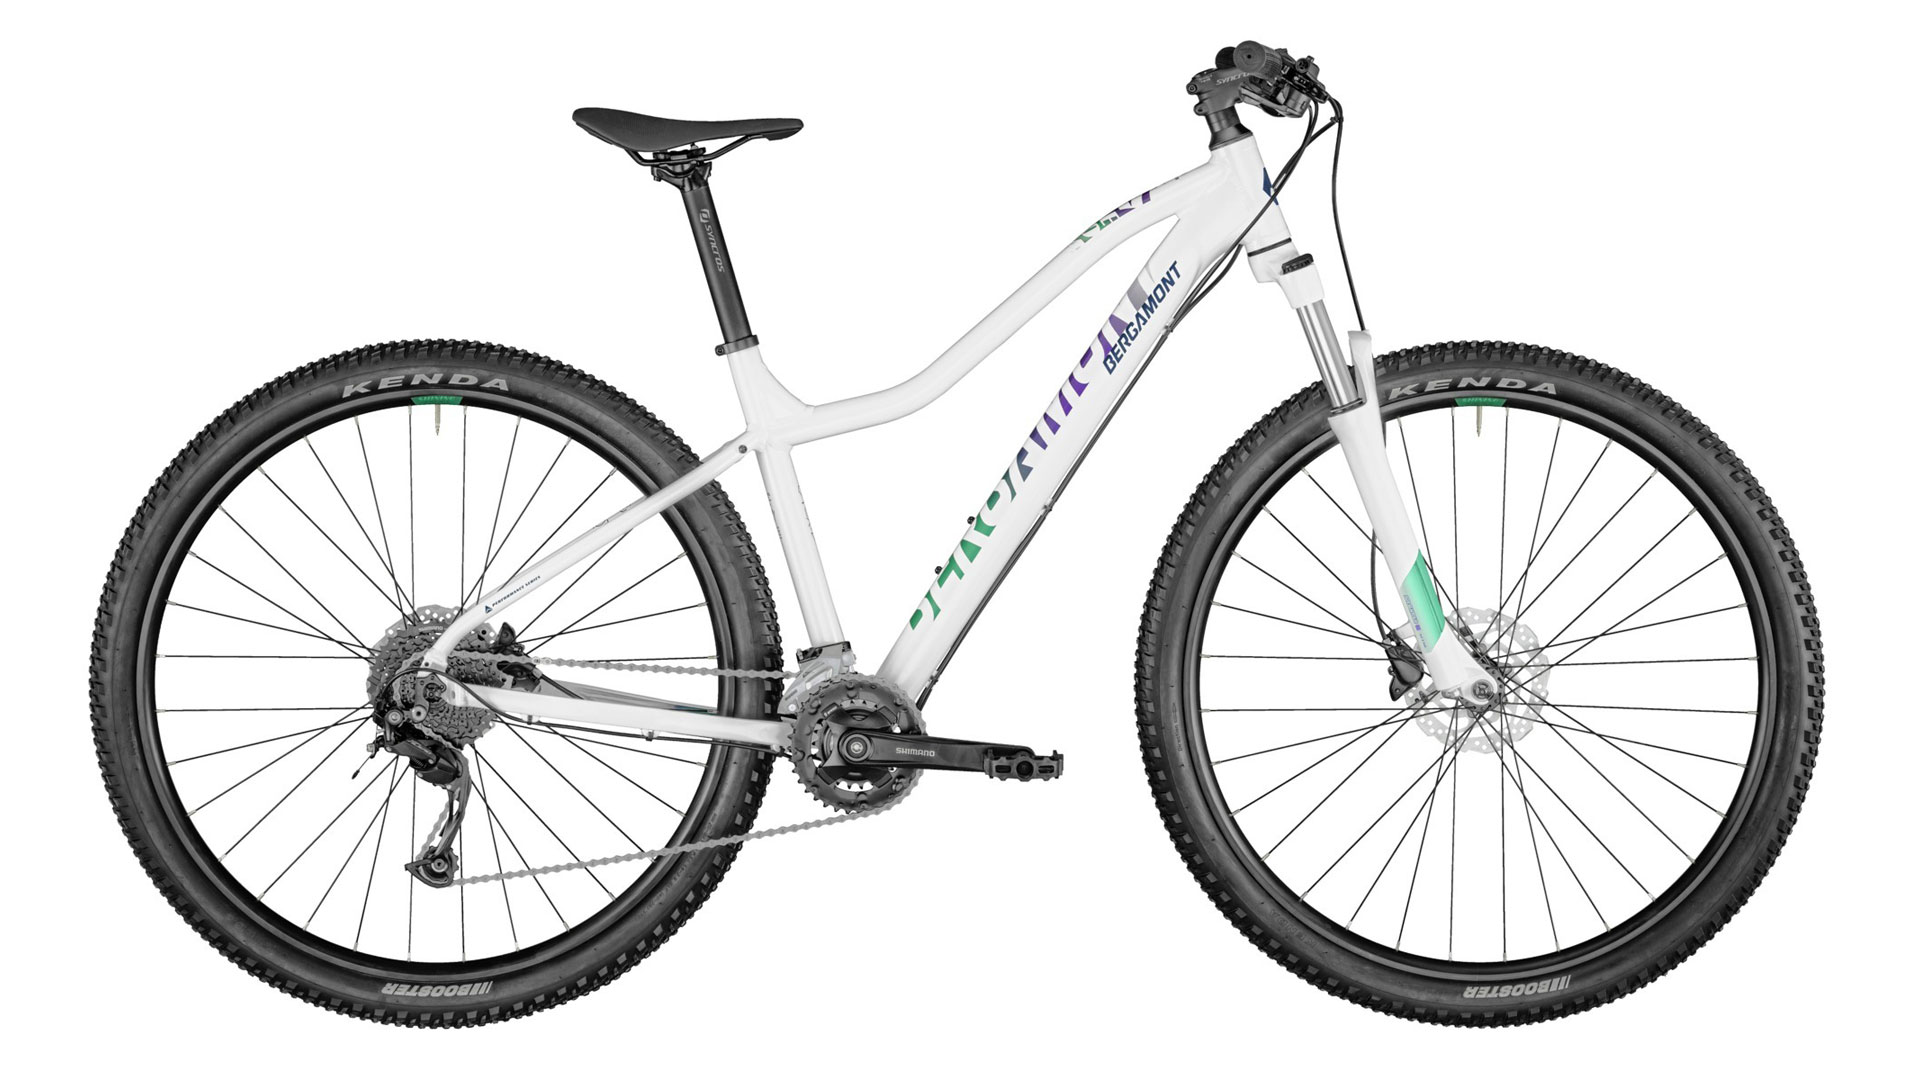  Отзывы о Женском велосипеде Bergamont Revox 4 FMN 27,5 2021